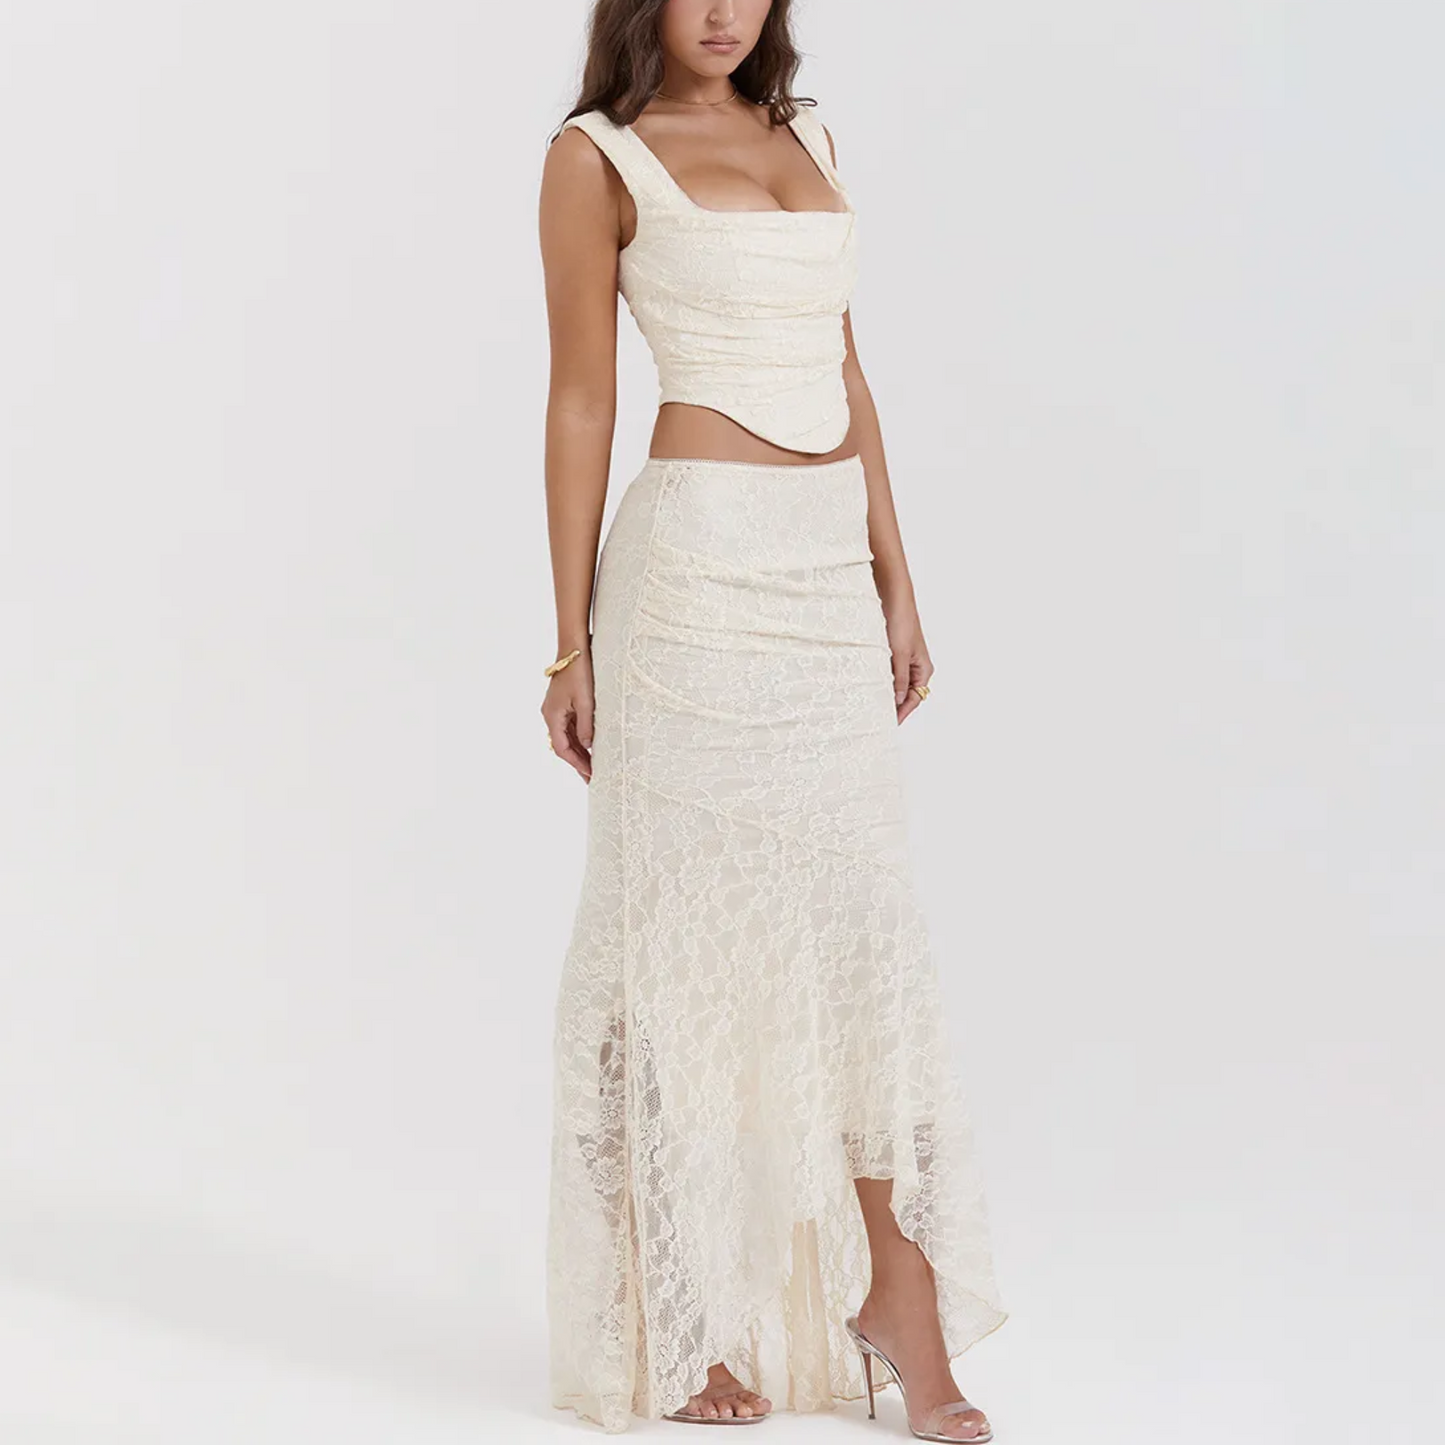 Dayanara - Ivory Two Piece Lace Crop Top & Maxi Skirt